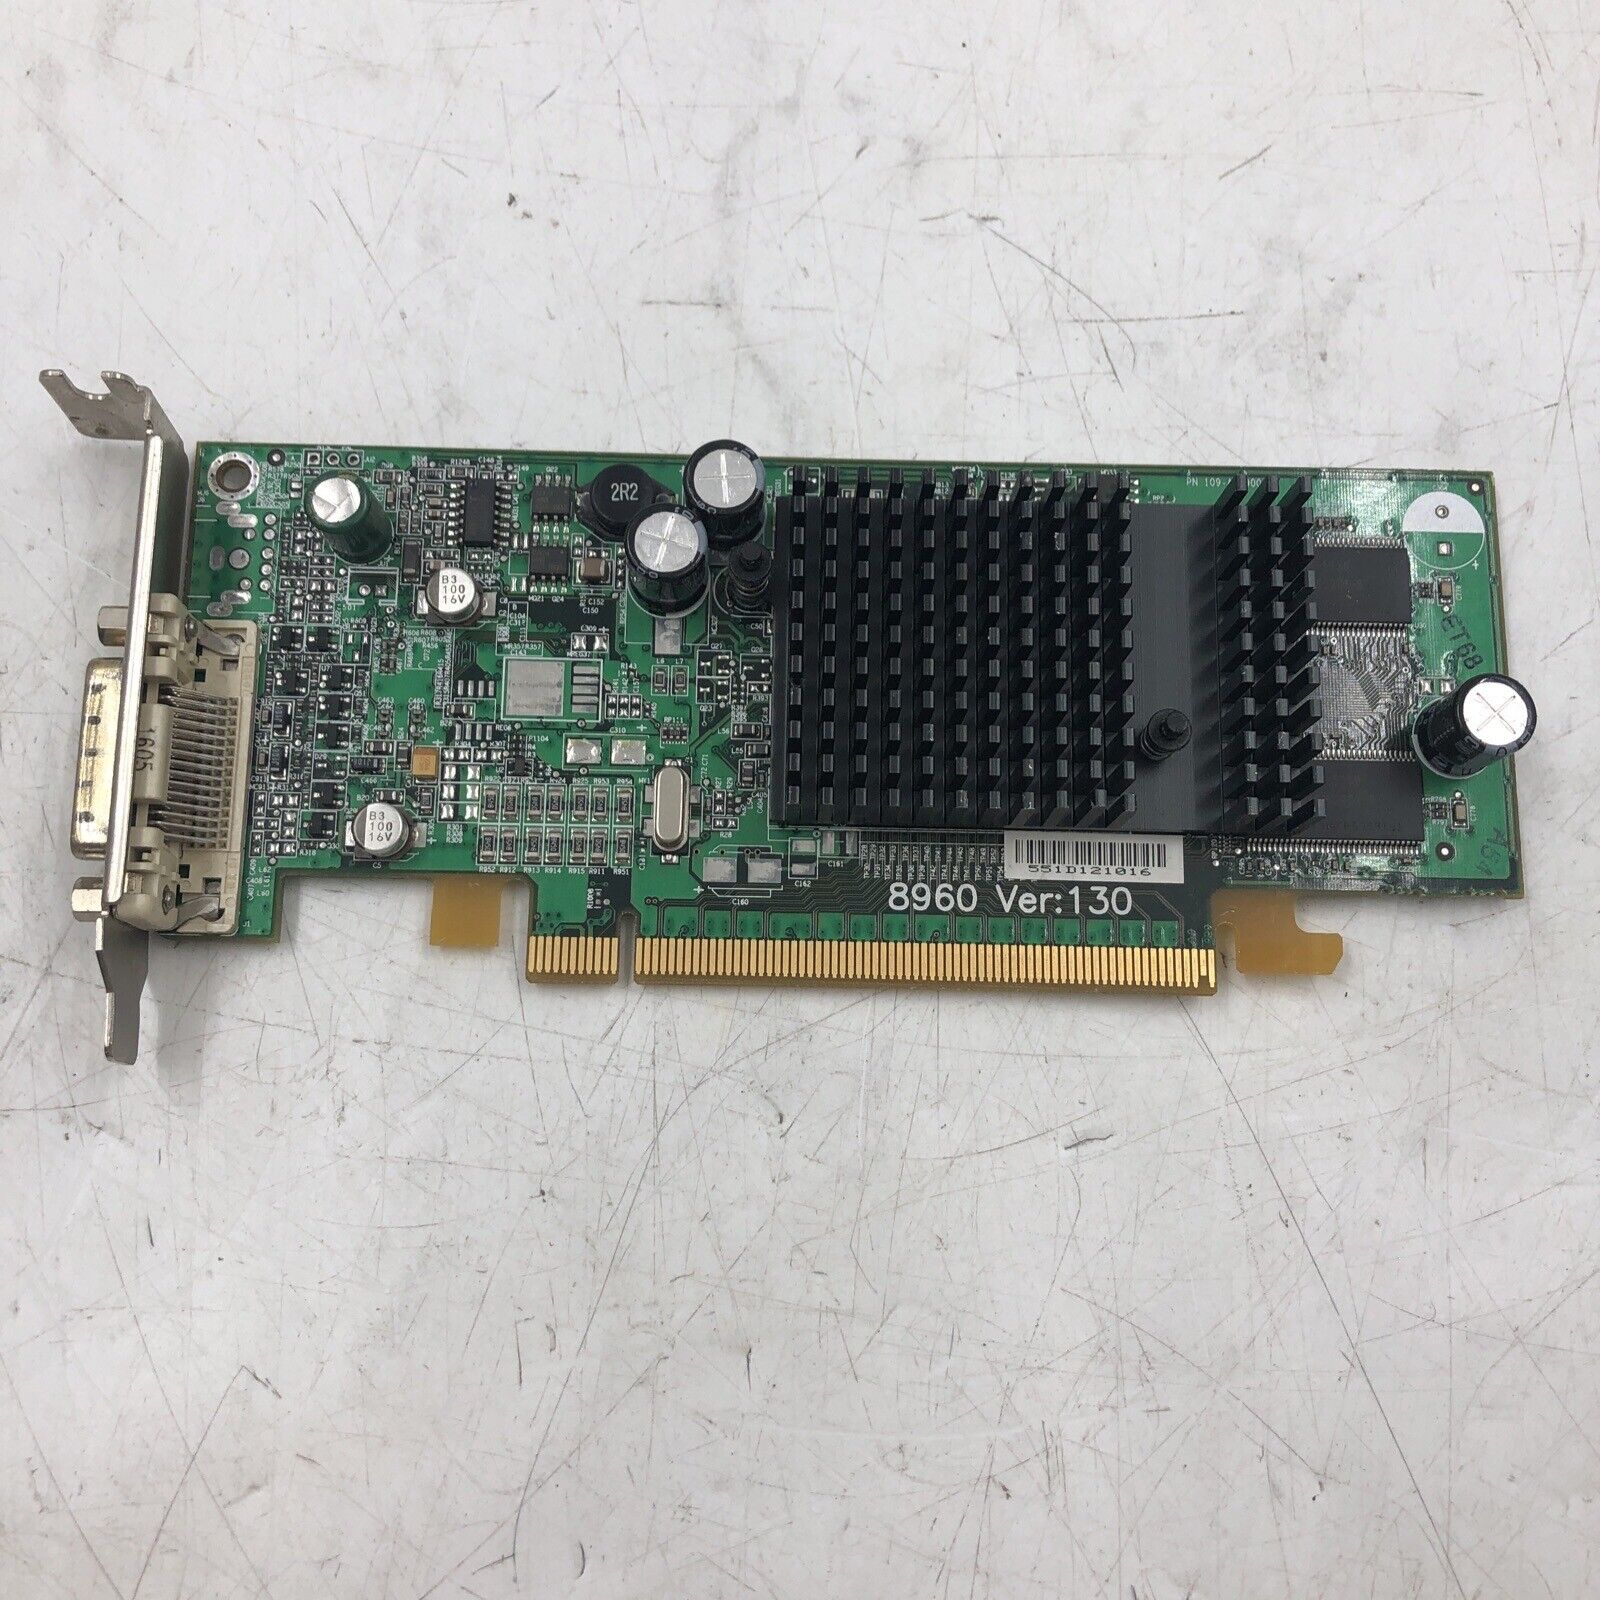 128MB PCI-E GRAPHICS CARD, CN-0P4007-69702-55F 8960.  VER:130 UNTESTED